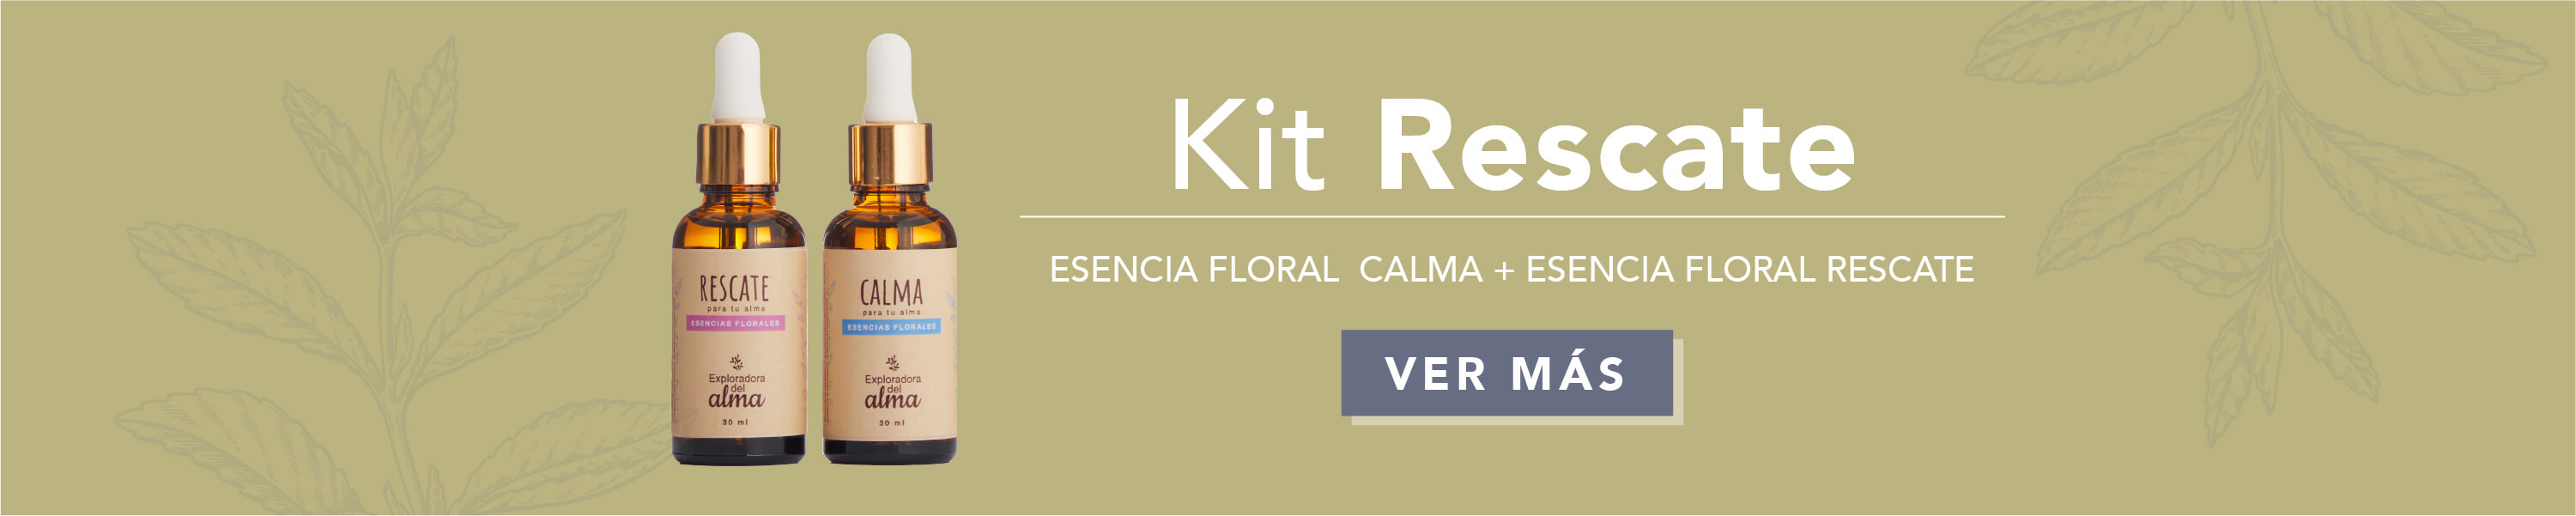 Esencia floral kit rescate promo 2